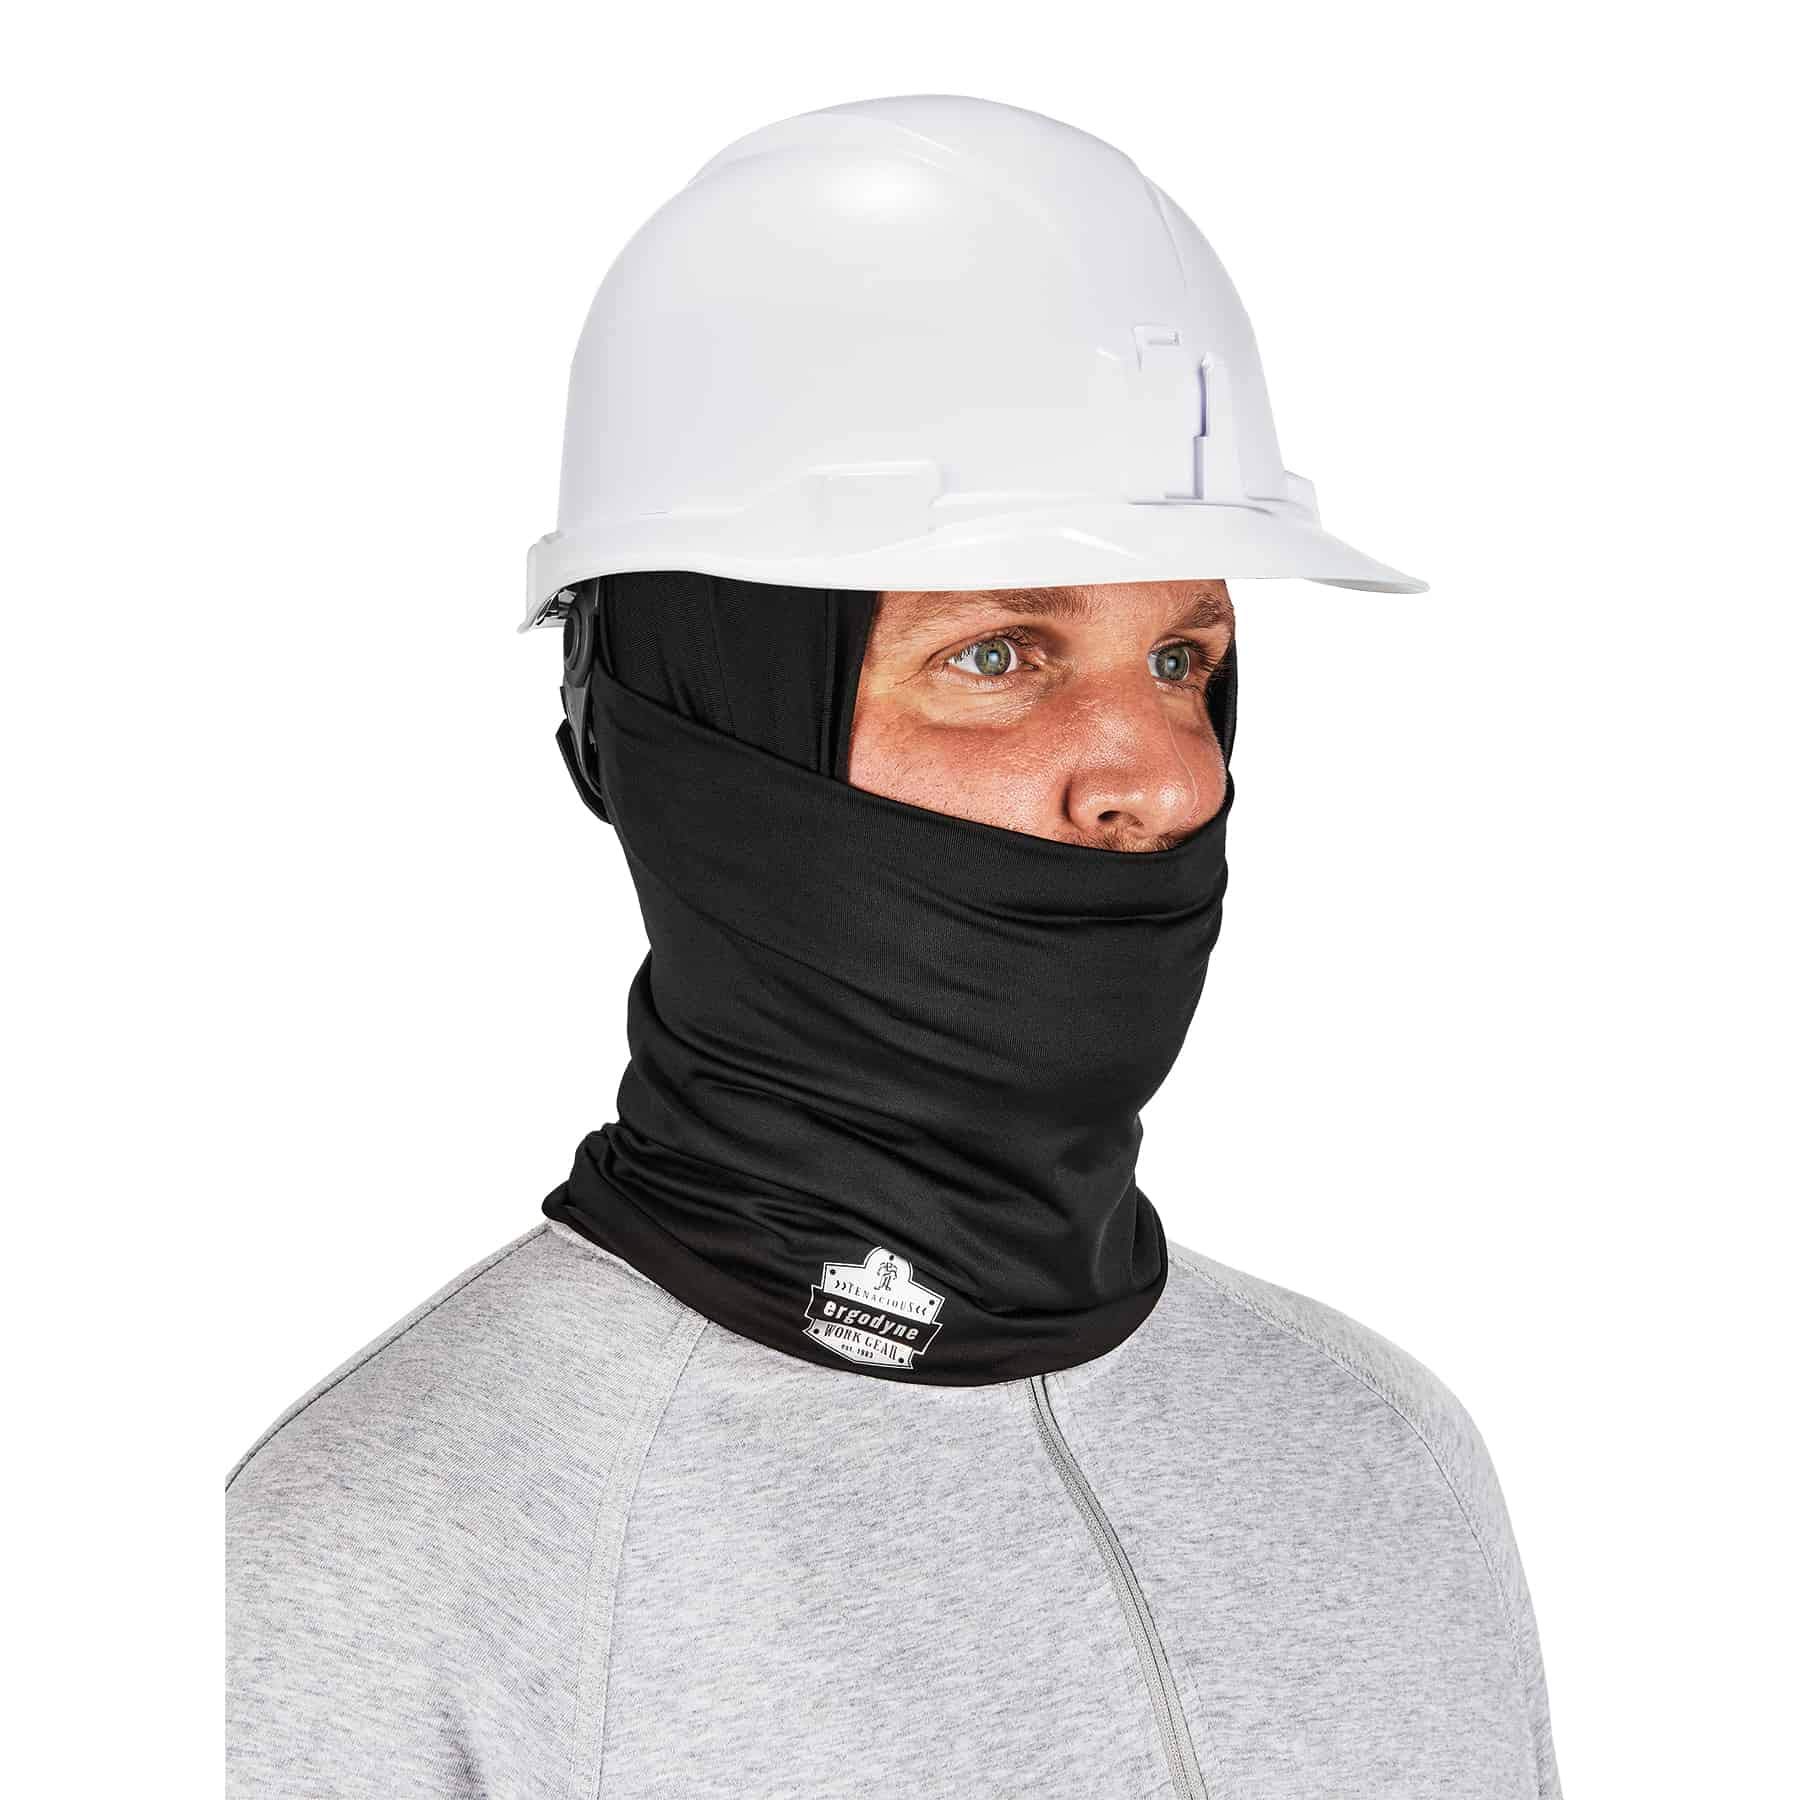 Ergodyne Chill-Its 6487 Cooling Neck Gaiter, Multiple Ways to Wear Headband or Face Mask,Black